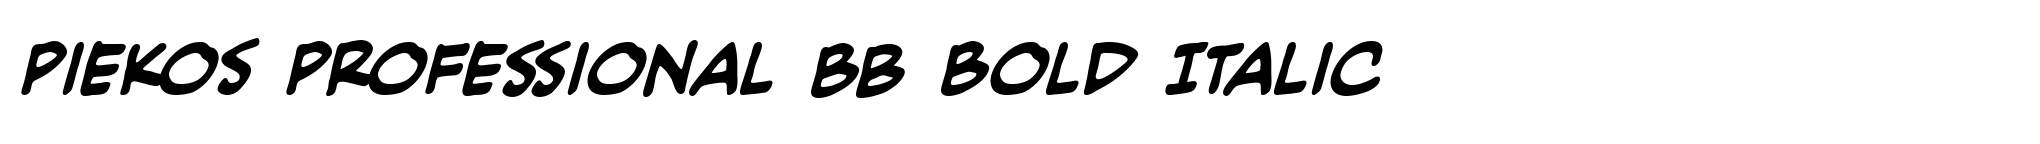 Piekos Professional BB Bold Italic image